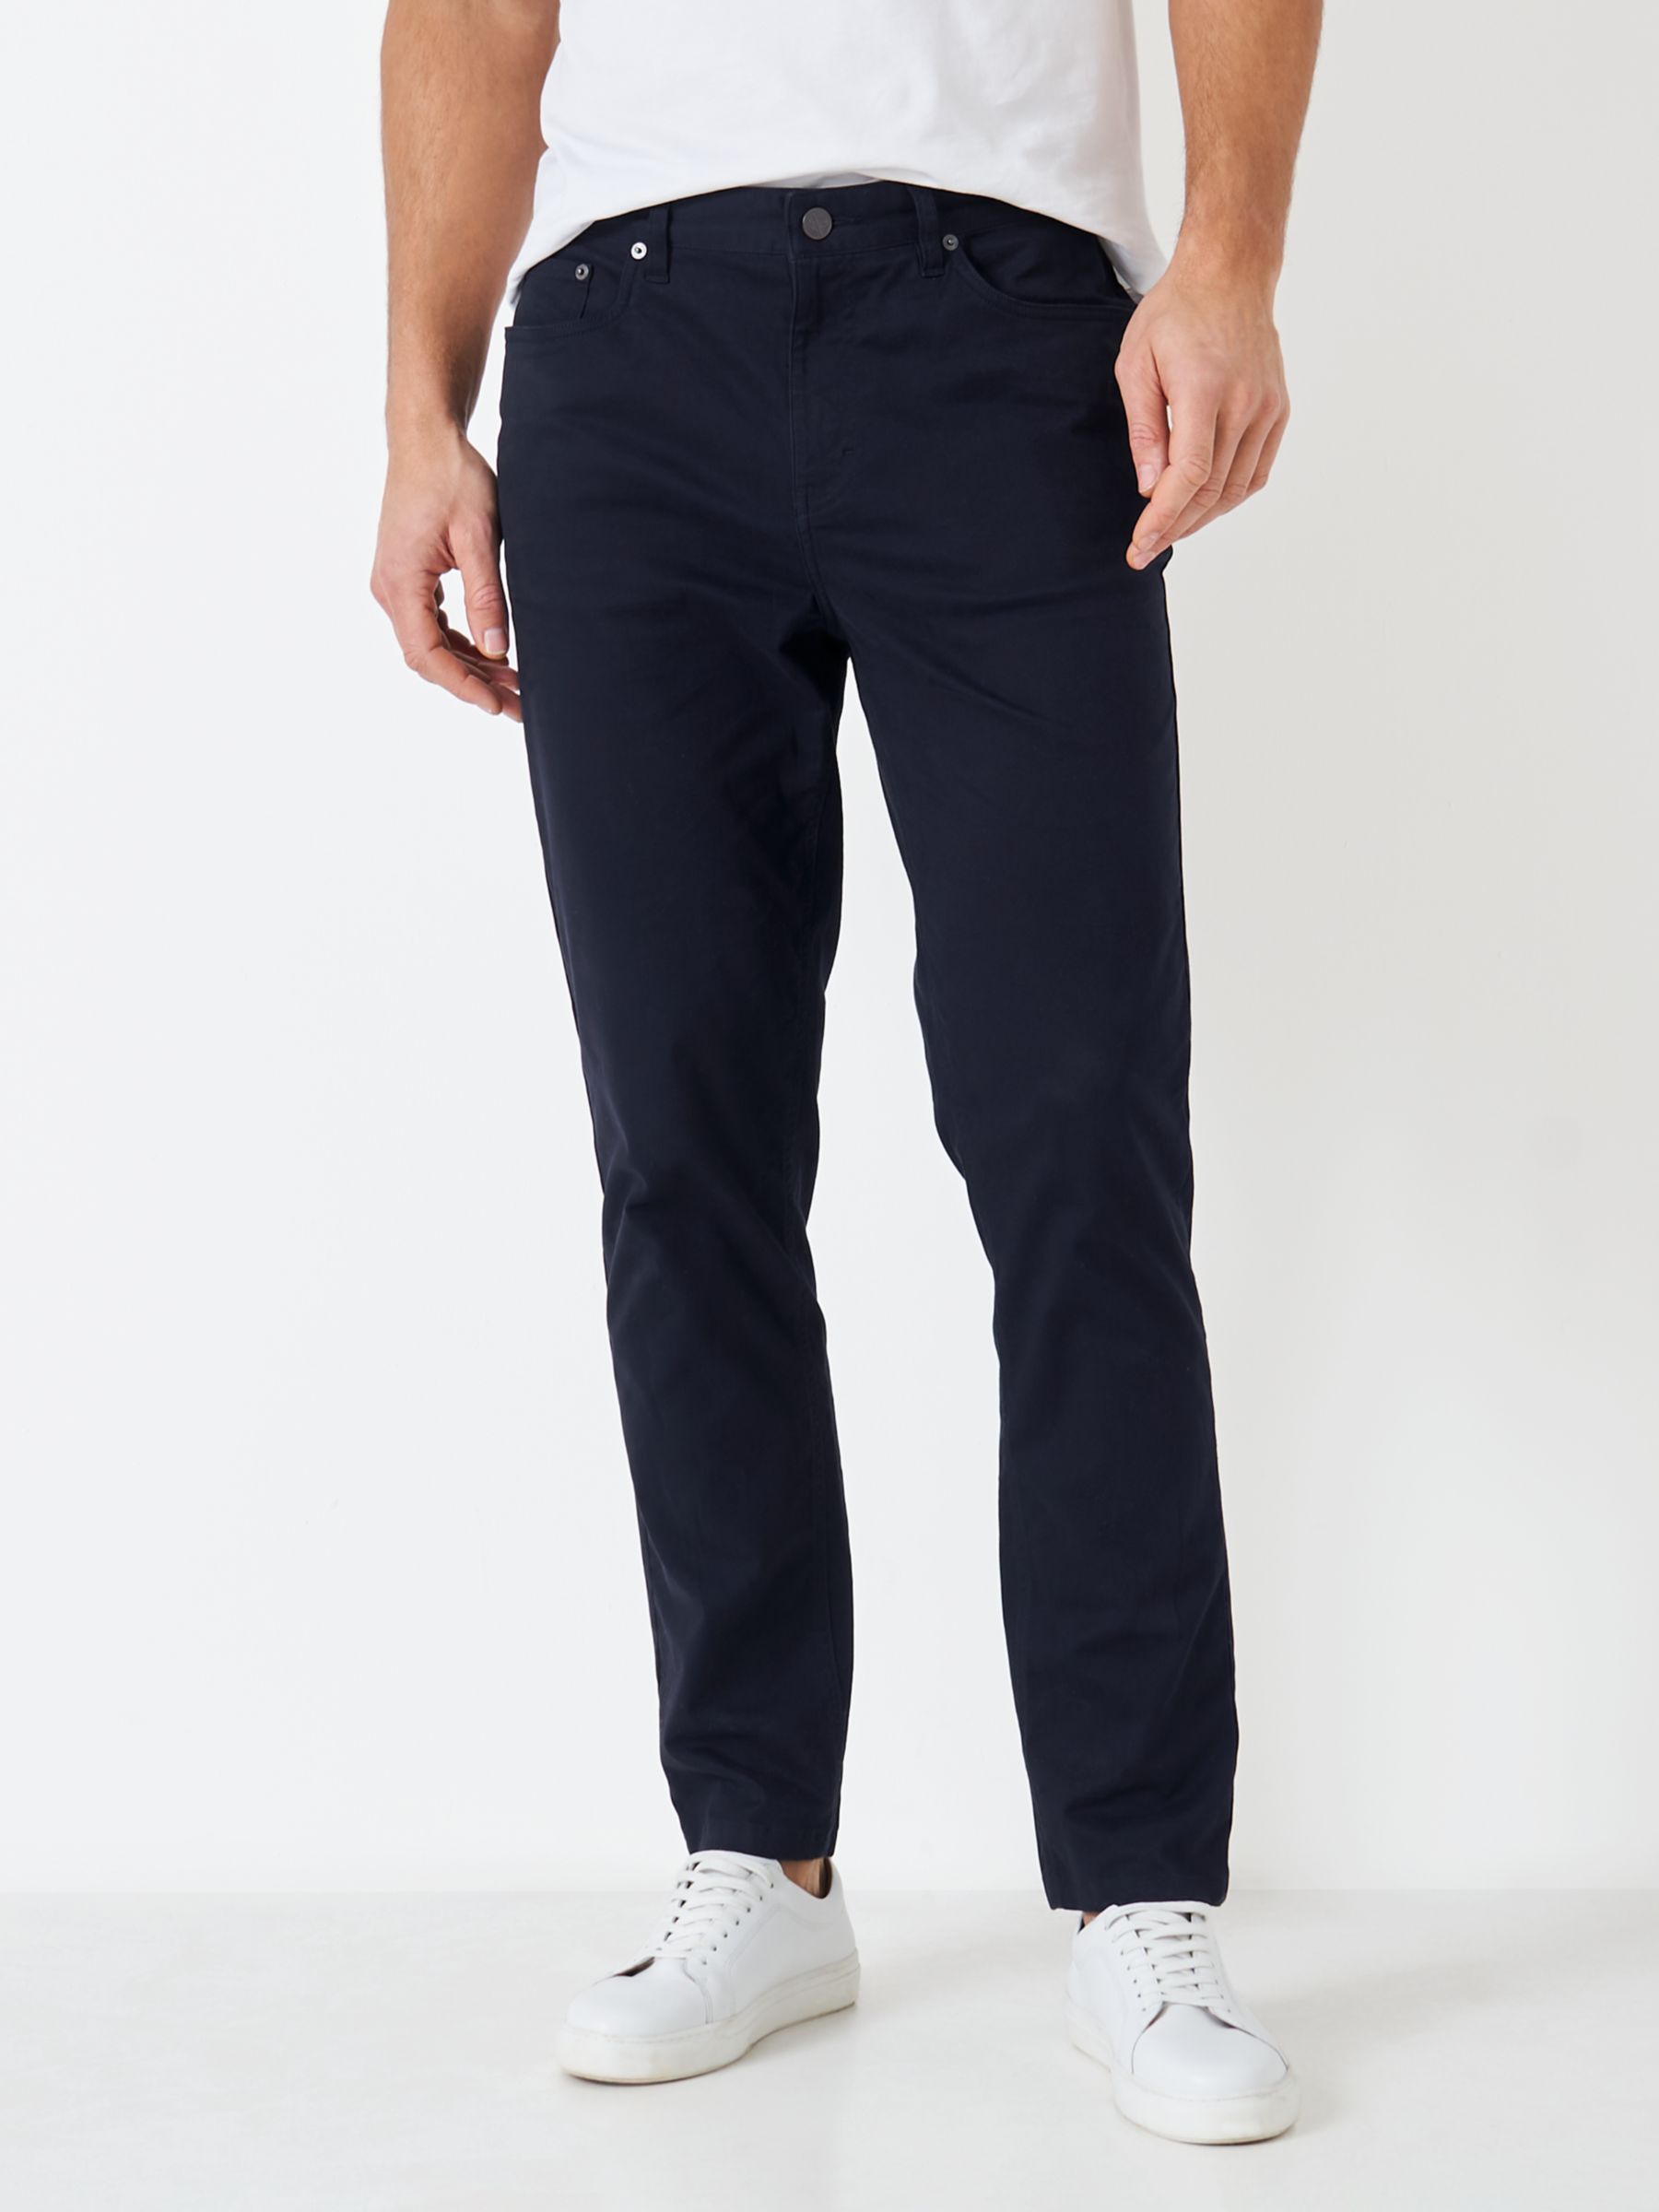 Crew Clothing Spencer Slim 5 Pocket Trousers, Navy at John Lewis & Partners